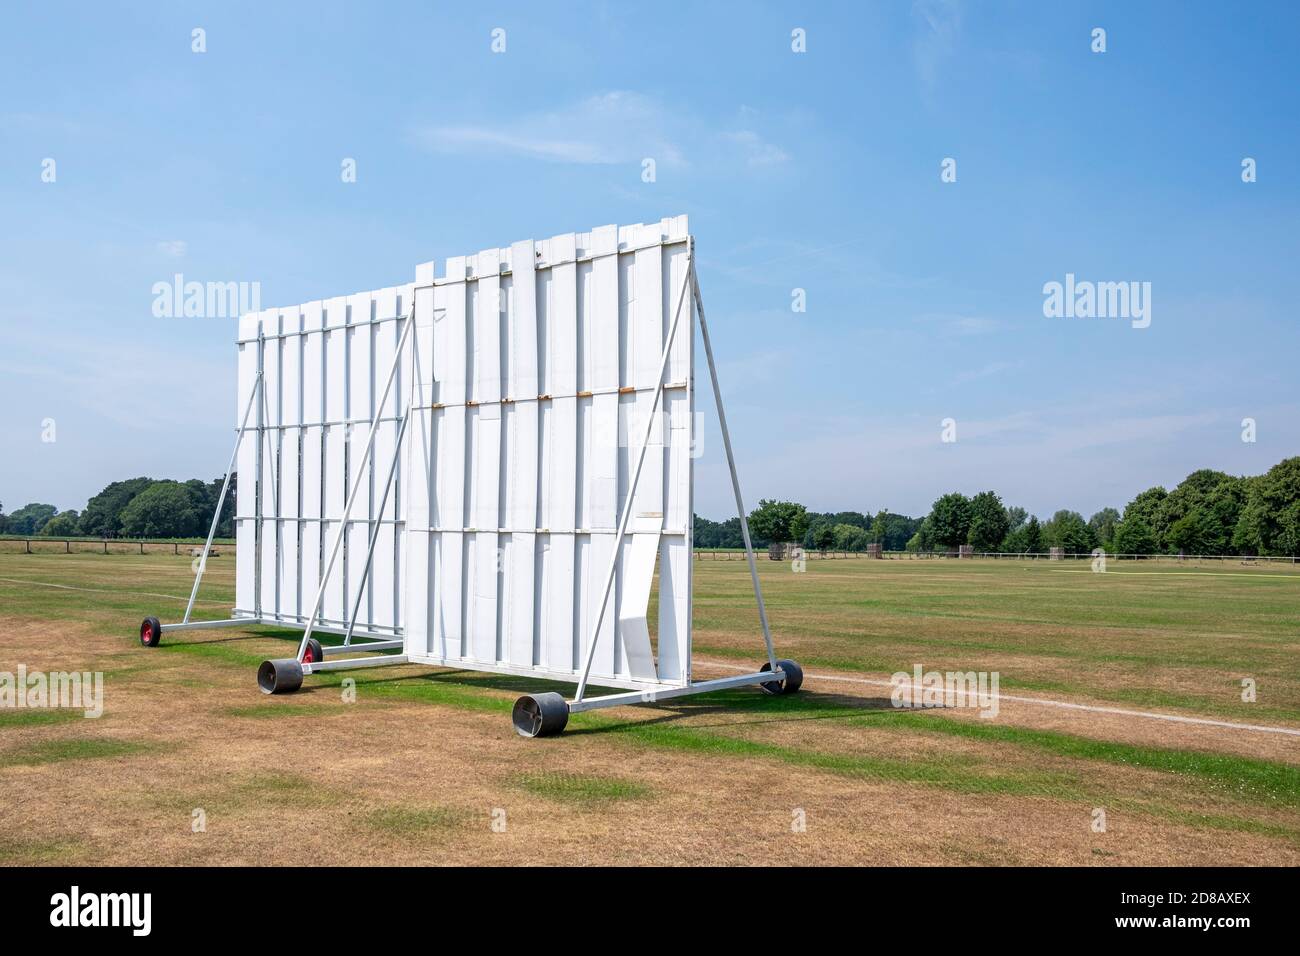 Cricket screen in a summer park Stock Photo